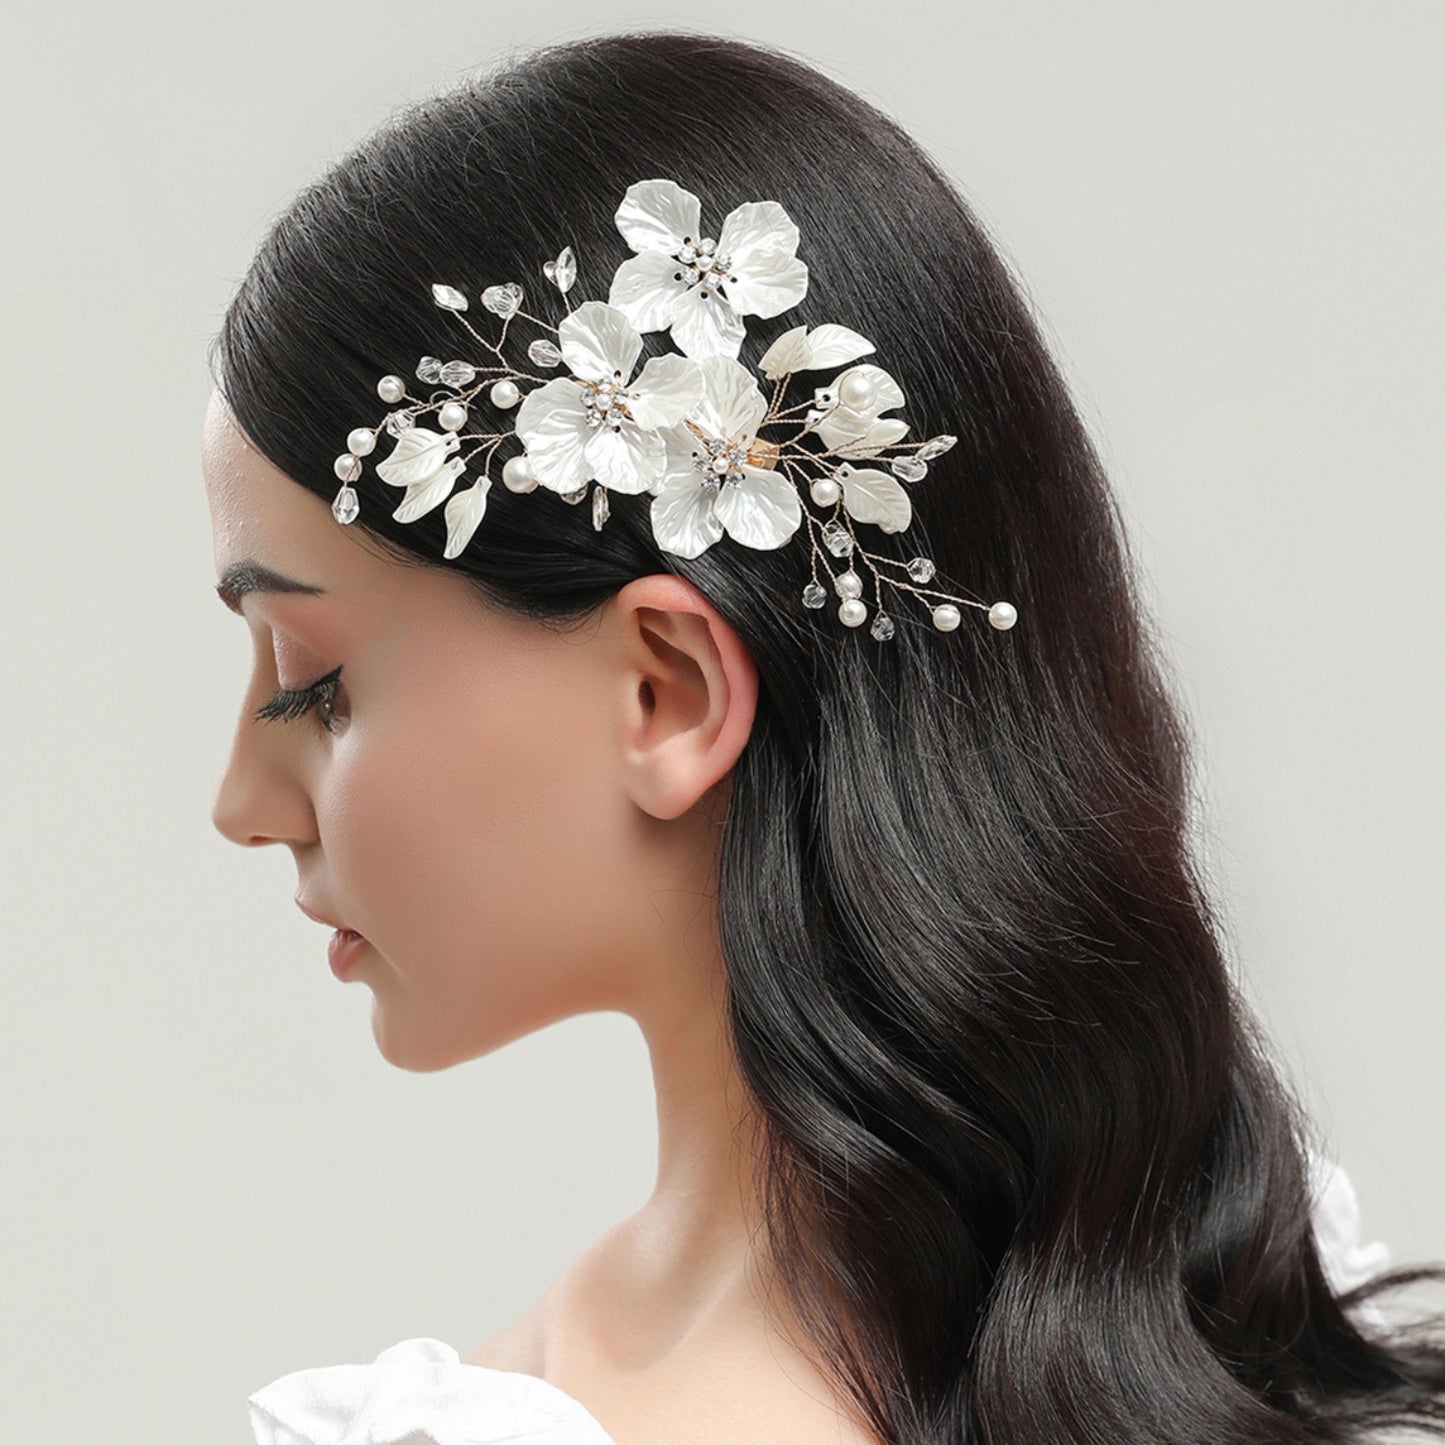 Wedding Hair Comb Clip Bridal Crystal Wedding Hair Accessories for Brides and Bridesmaid, Silver